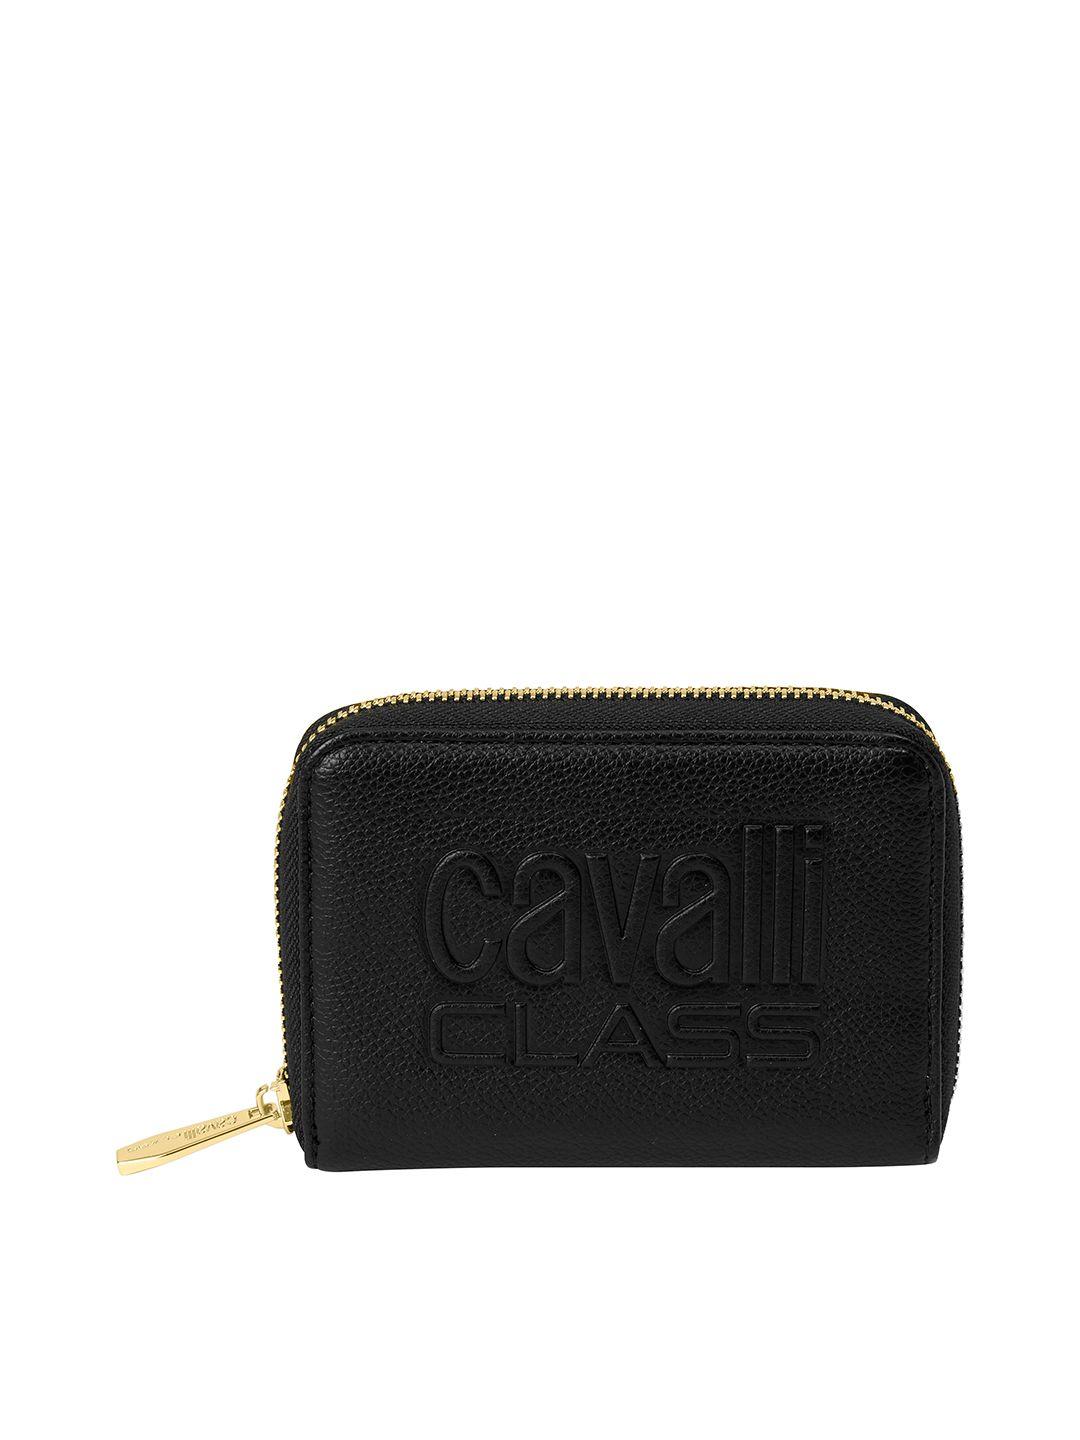 cavalli class women textured zip around wallet